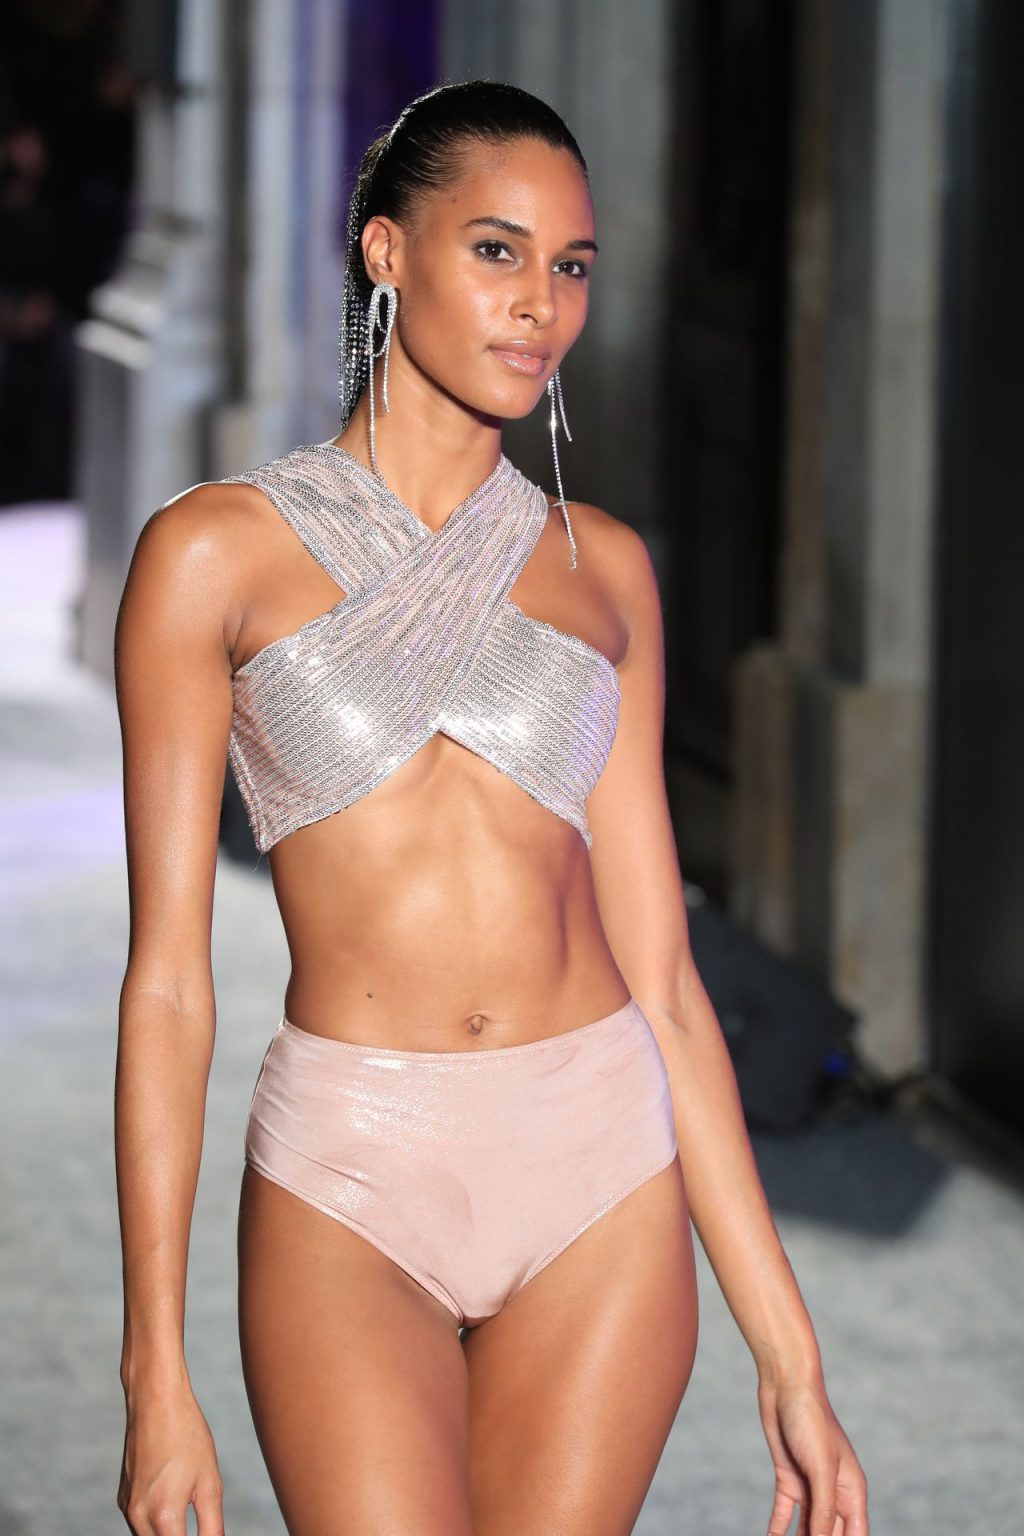 Models Display Their Tits and Legs at the Etam Fashion Show (93 Photos)